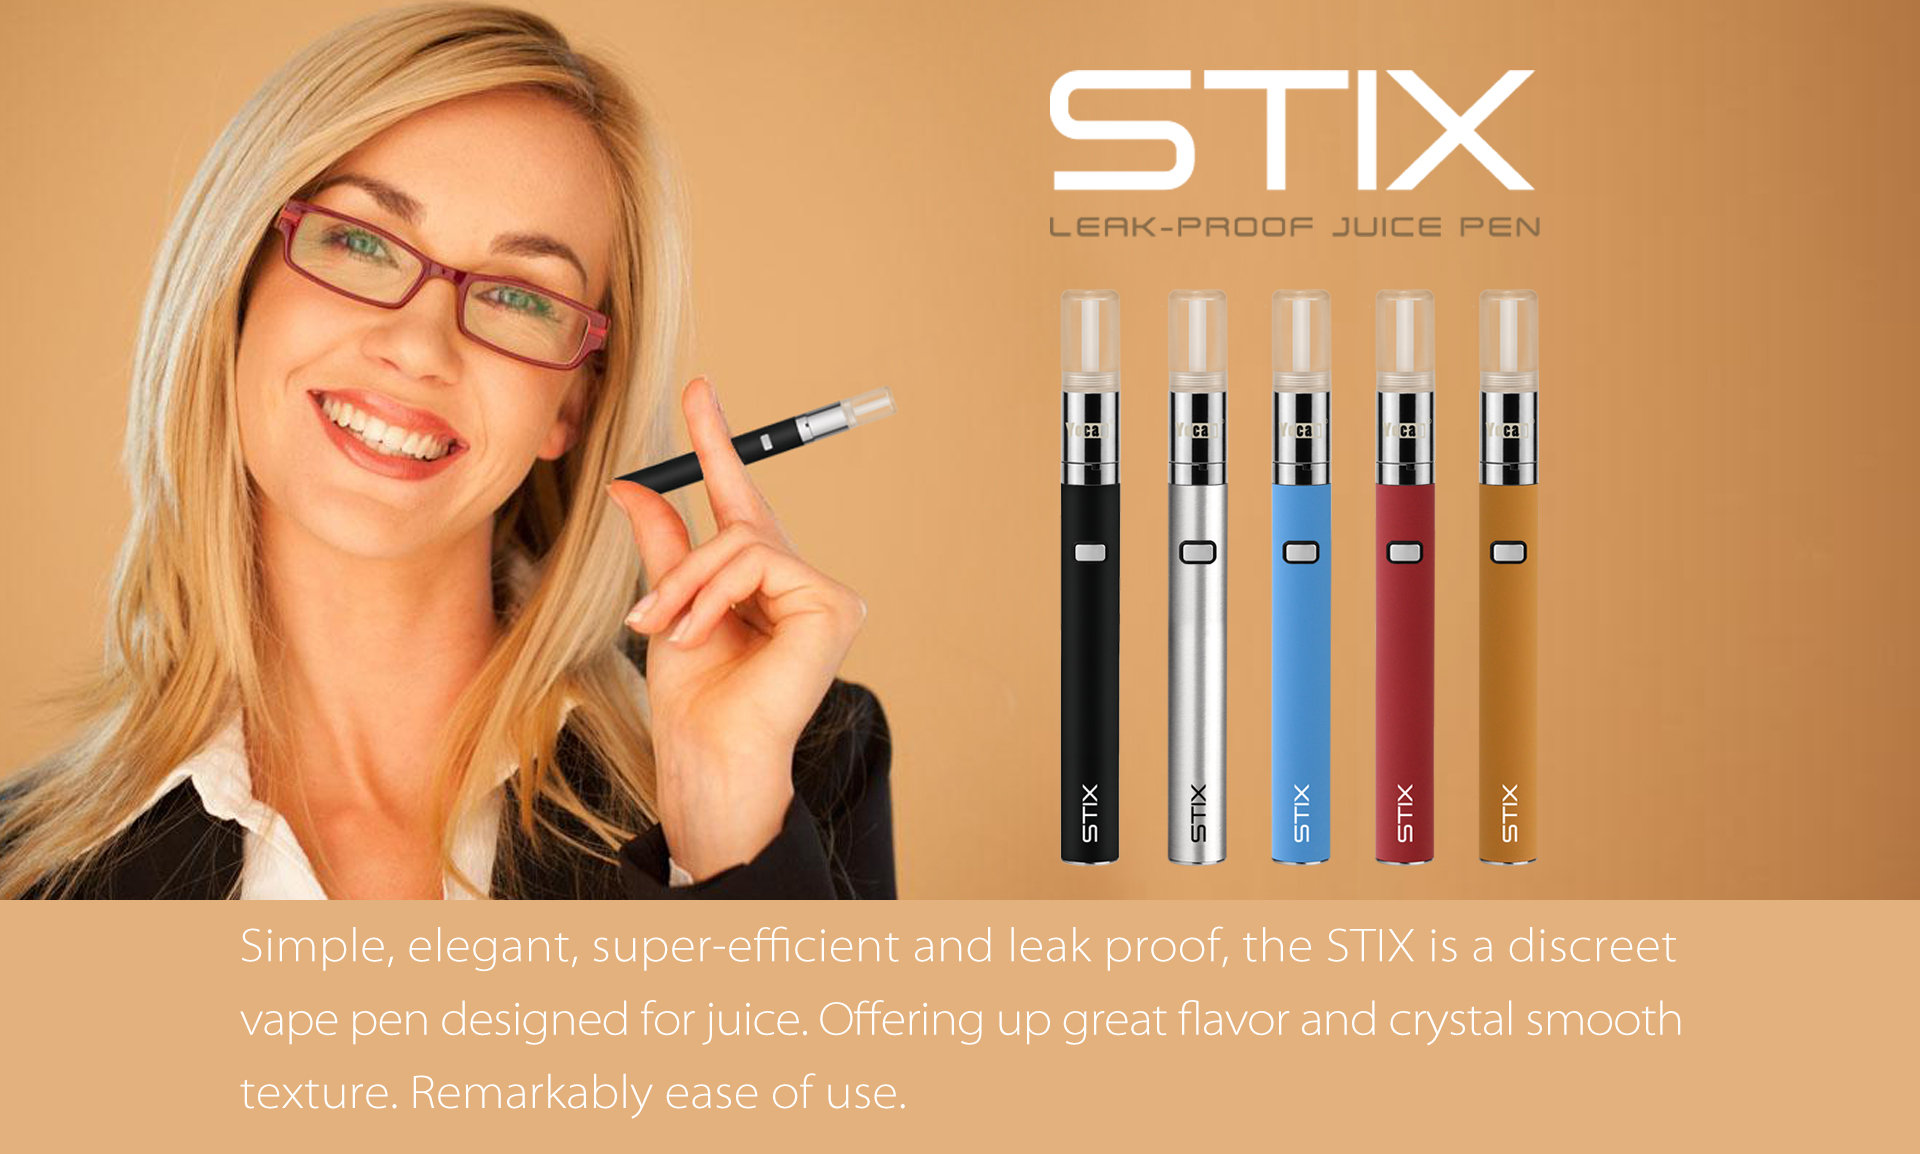 Simple, elegant, super-efficient and leak-proof, the STIX is a discreet vape pen designed for juice.